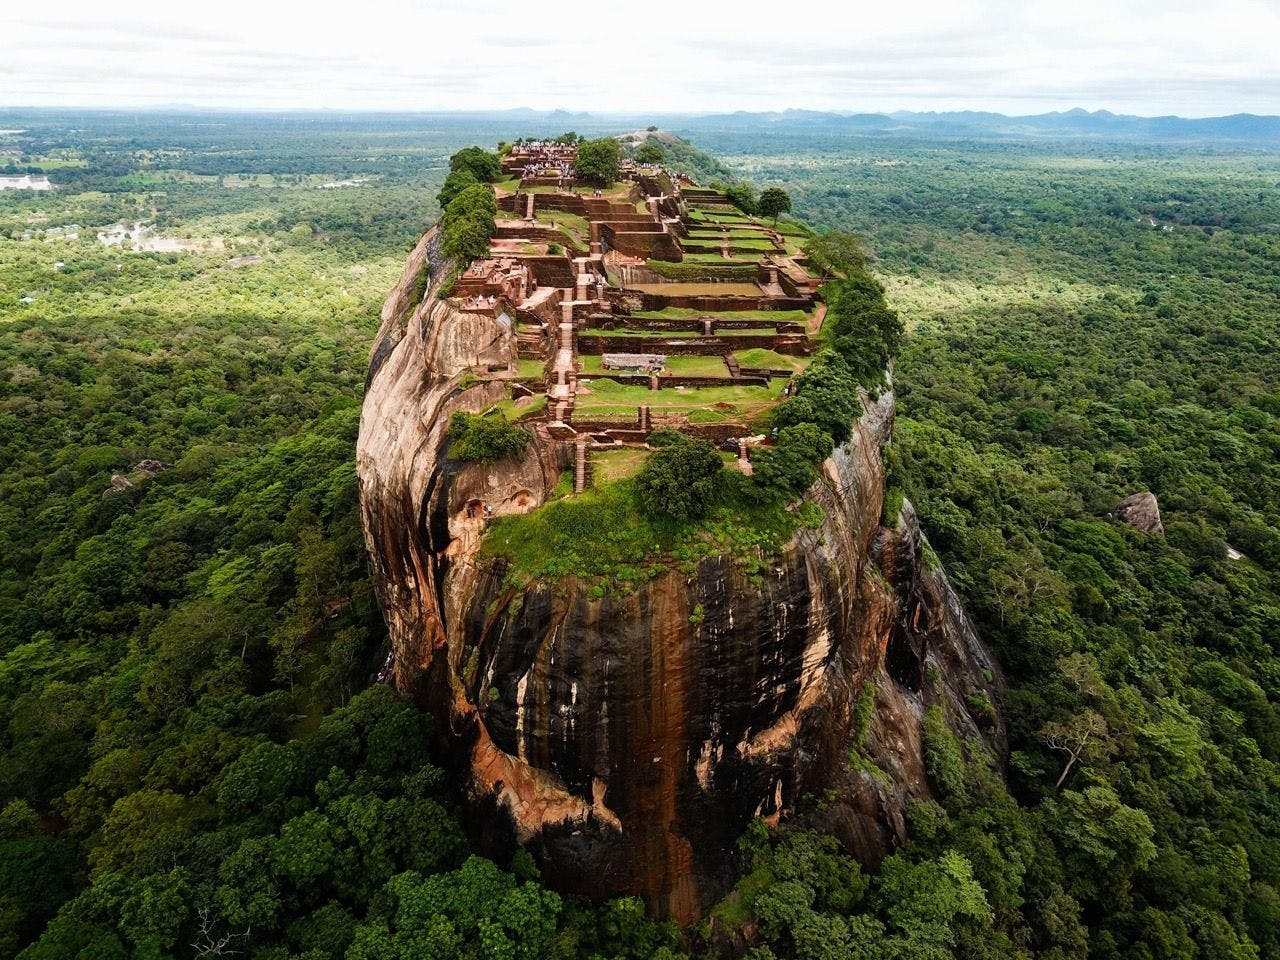 Big rock formation in Sigiriya, Sri Lanka.